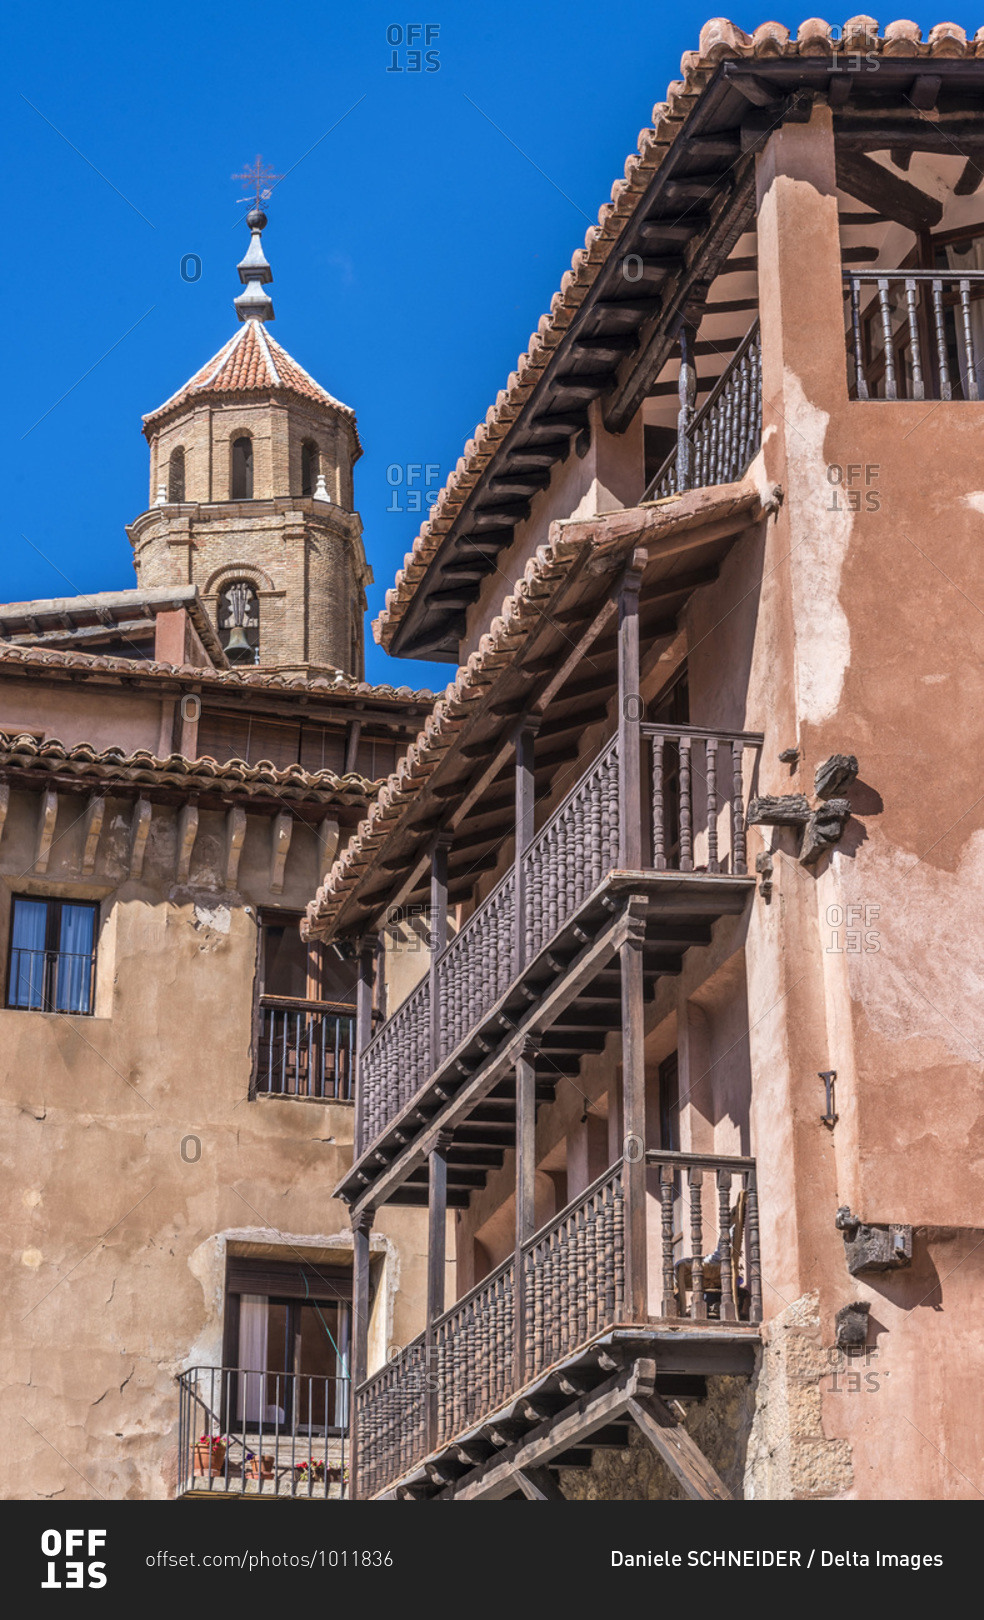 Spain, autonomous community of Aragon, Province of Teruel, Albarracin vilage (Most Beautiful Village in Spain), house with wooden balconies